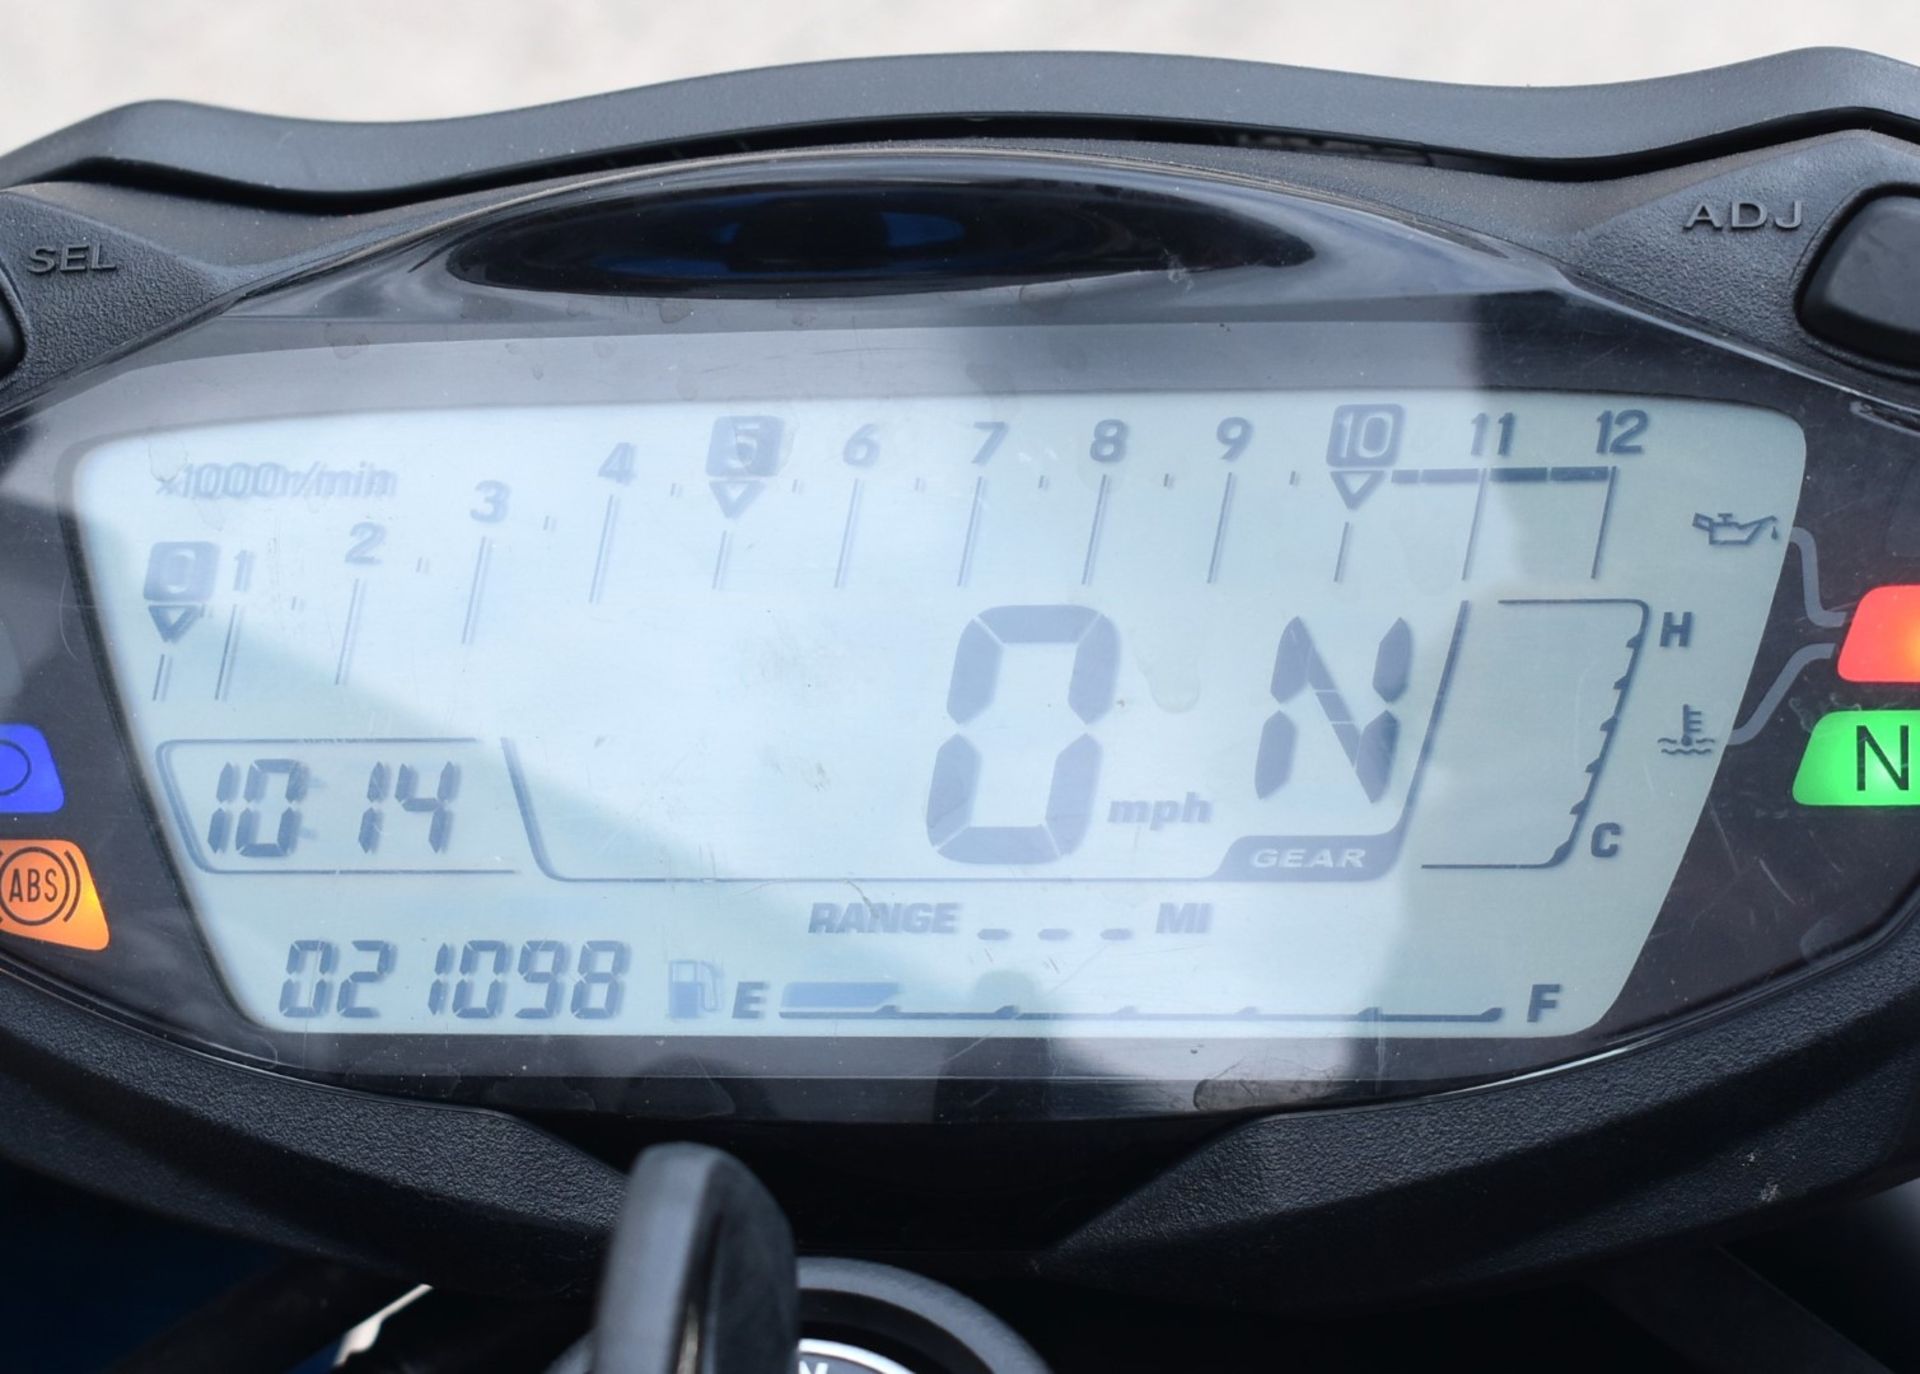 2018 Suzuki SV650 Motorcycle - BL18 KLP - Mileage: 21,098 - 4 Months MOT - Image 5 of 37